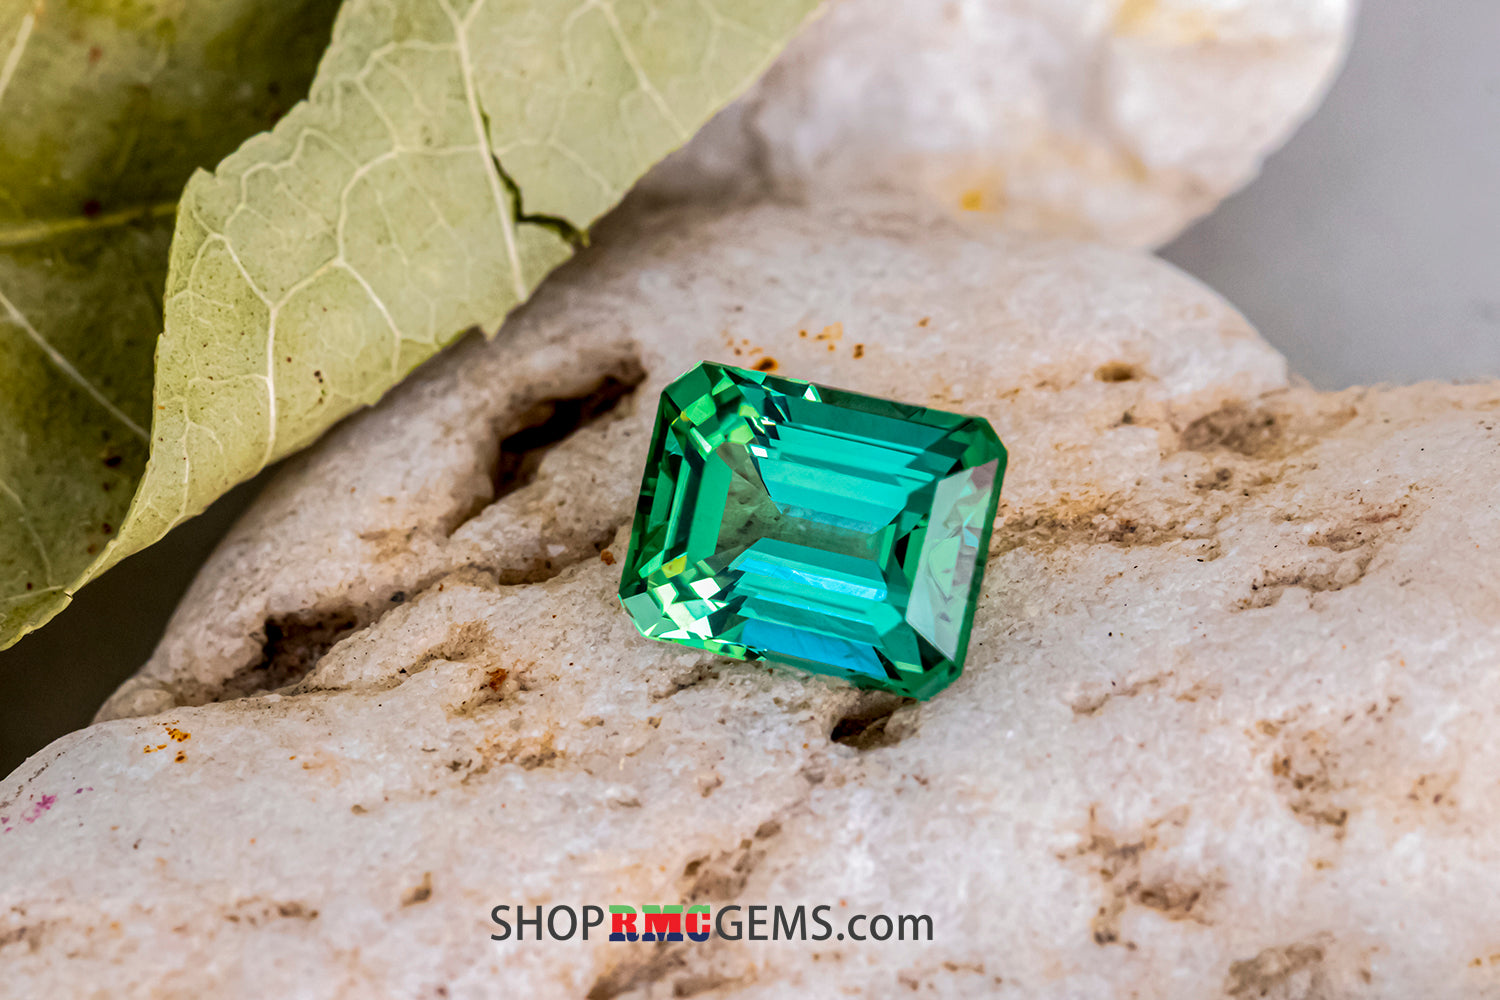 Green tourmaline – Versatile light from stunning gemstones